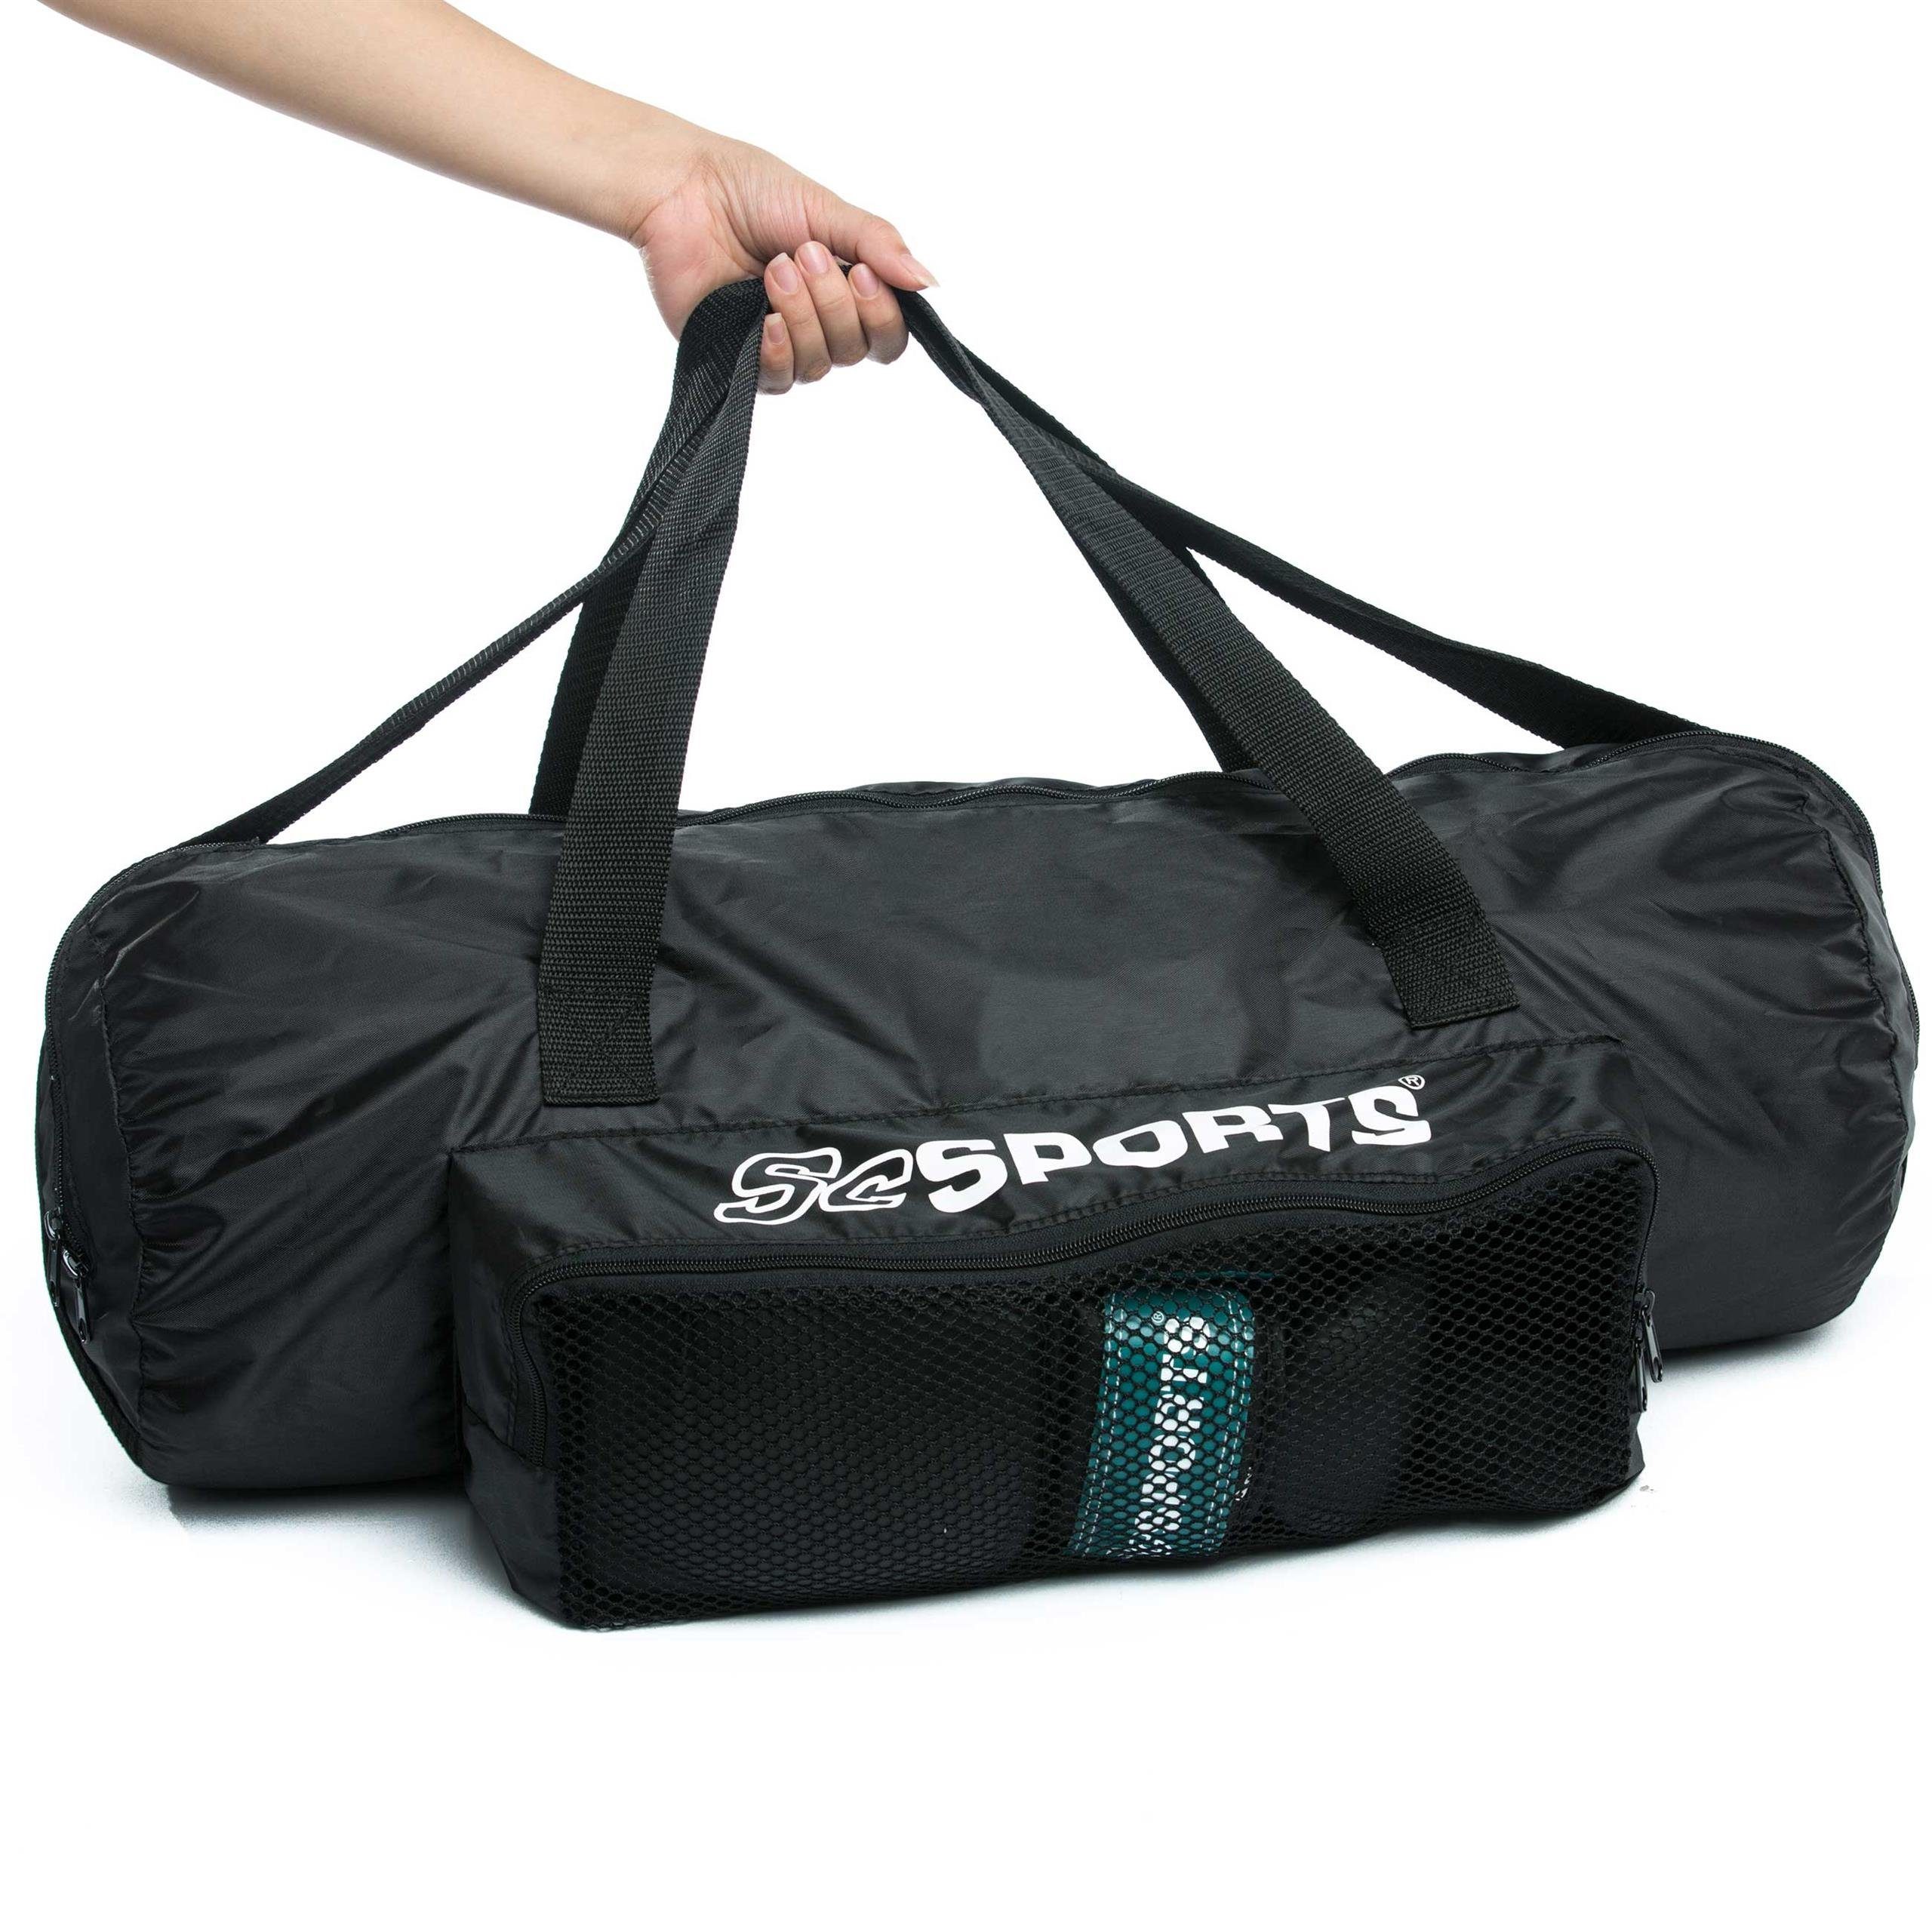 Nylongurt/Tasche Gefüllt, Boxhandschuhen/Bandagen, Boxsack ScSPORTS® Boxsack Set-5,5kg,